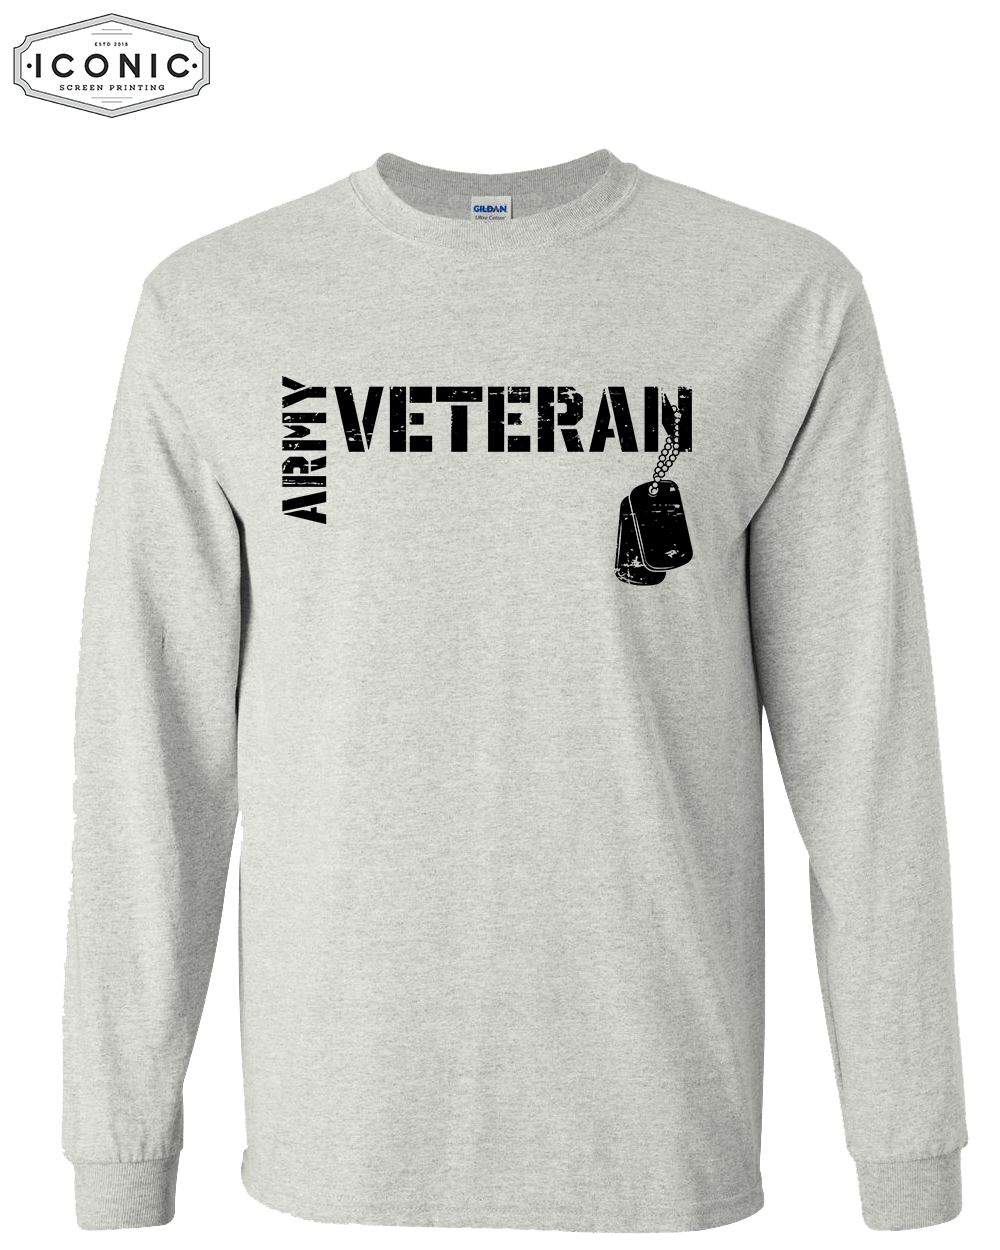 Army Veteran - Ultra Cotton Long Sleeve